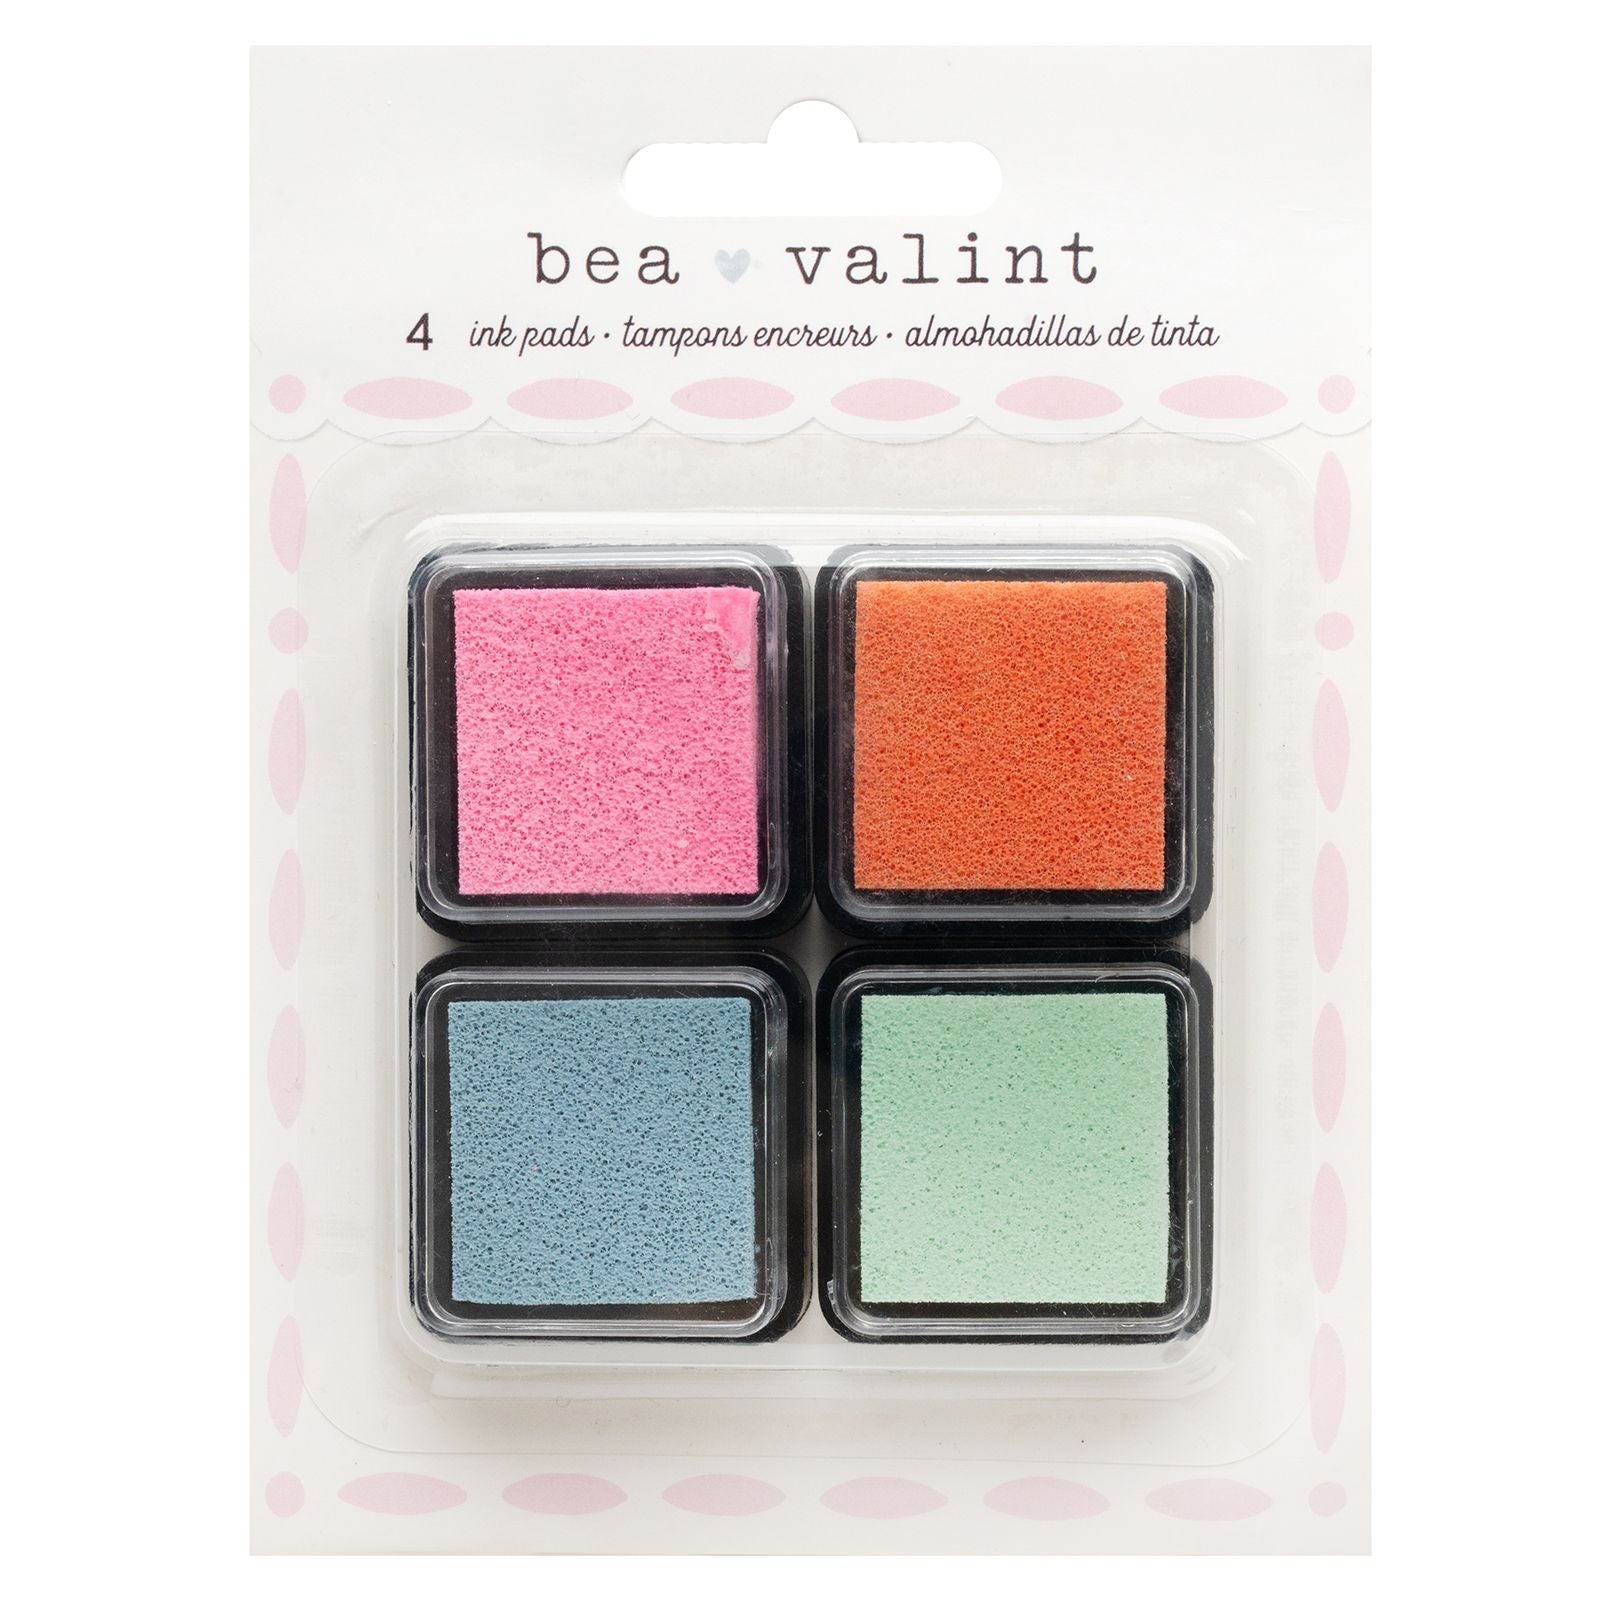 Poppy & Pear Stamps / Cojines de Tinta para Sellos Bea Valint